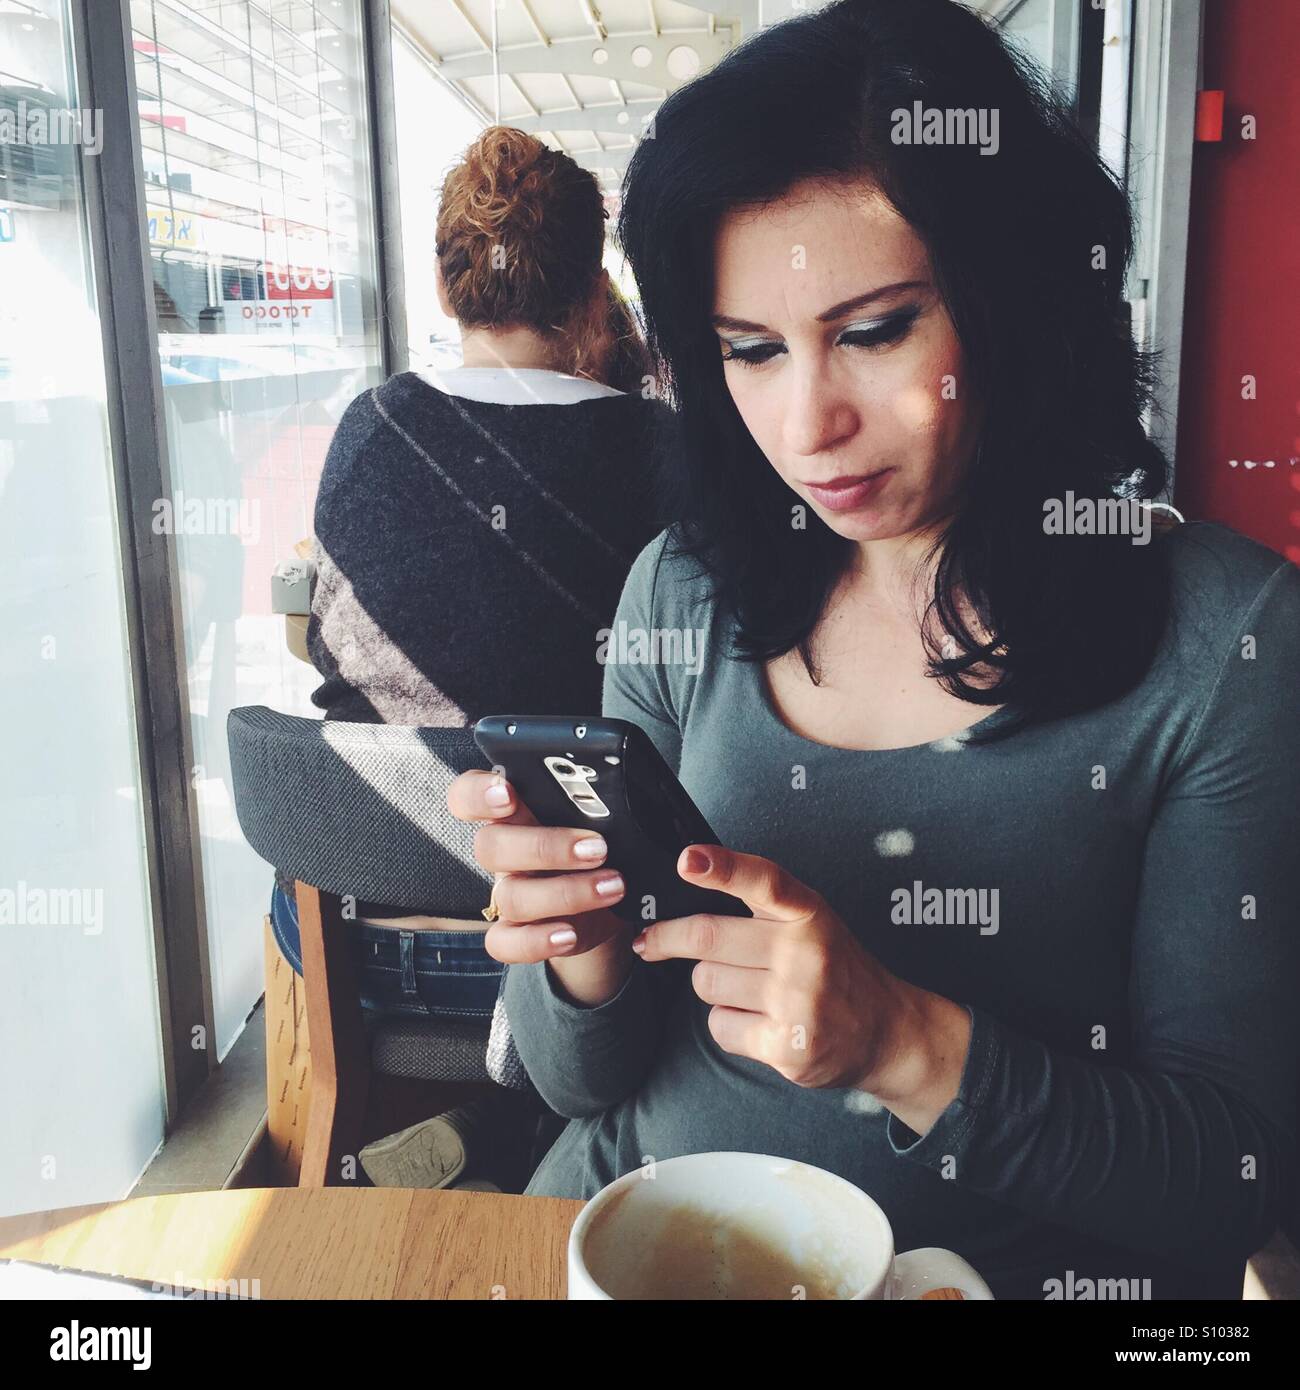 Women using a mobile device. Coffeeshop Stock Photo